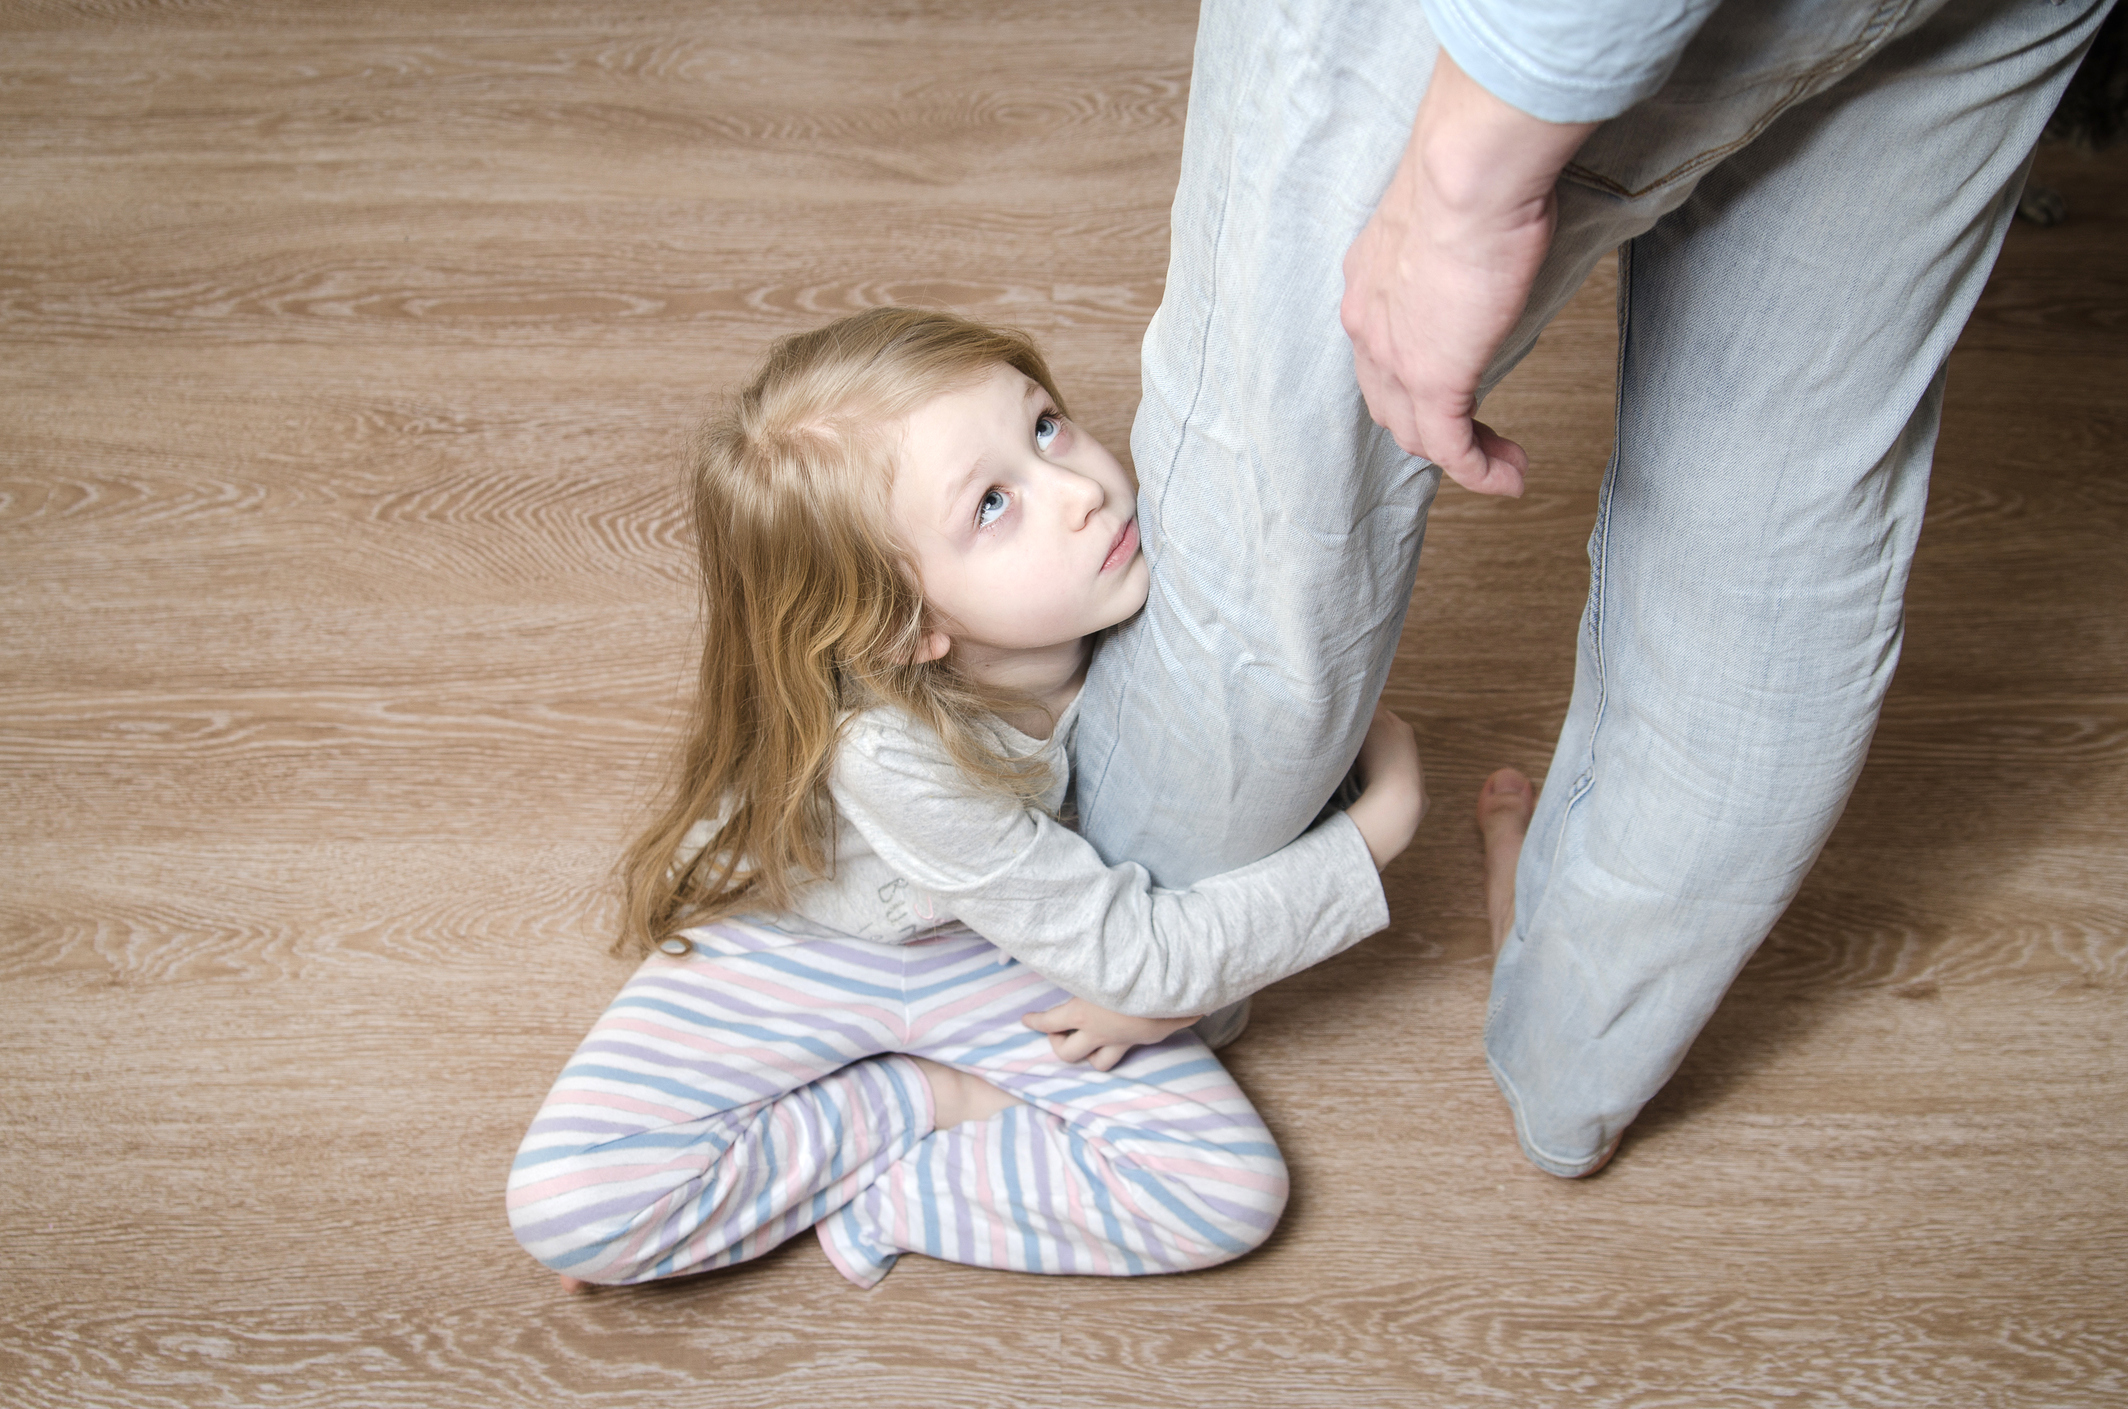 non custodial parent not visiting child